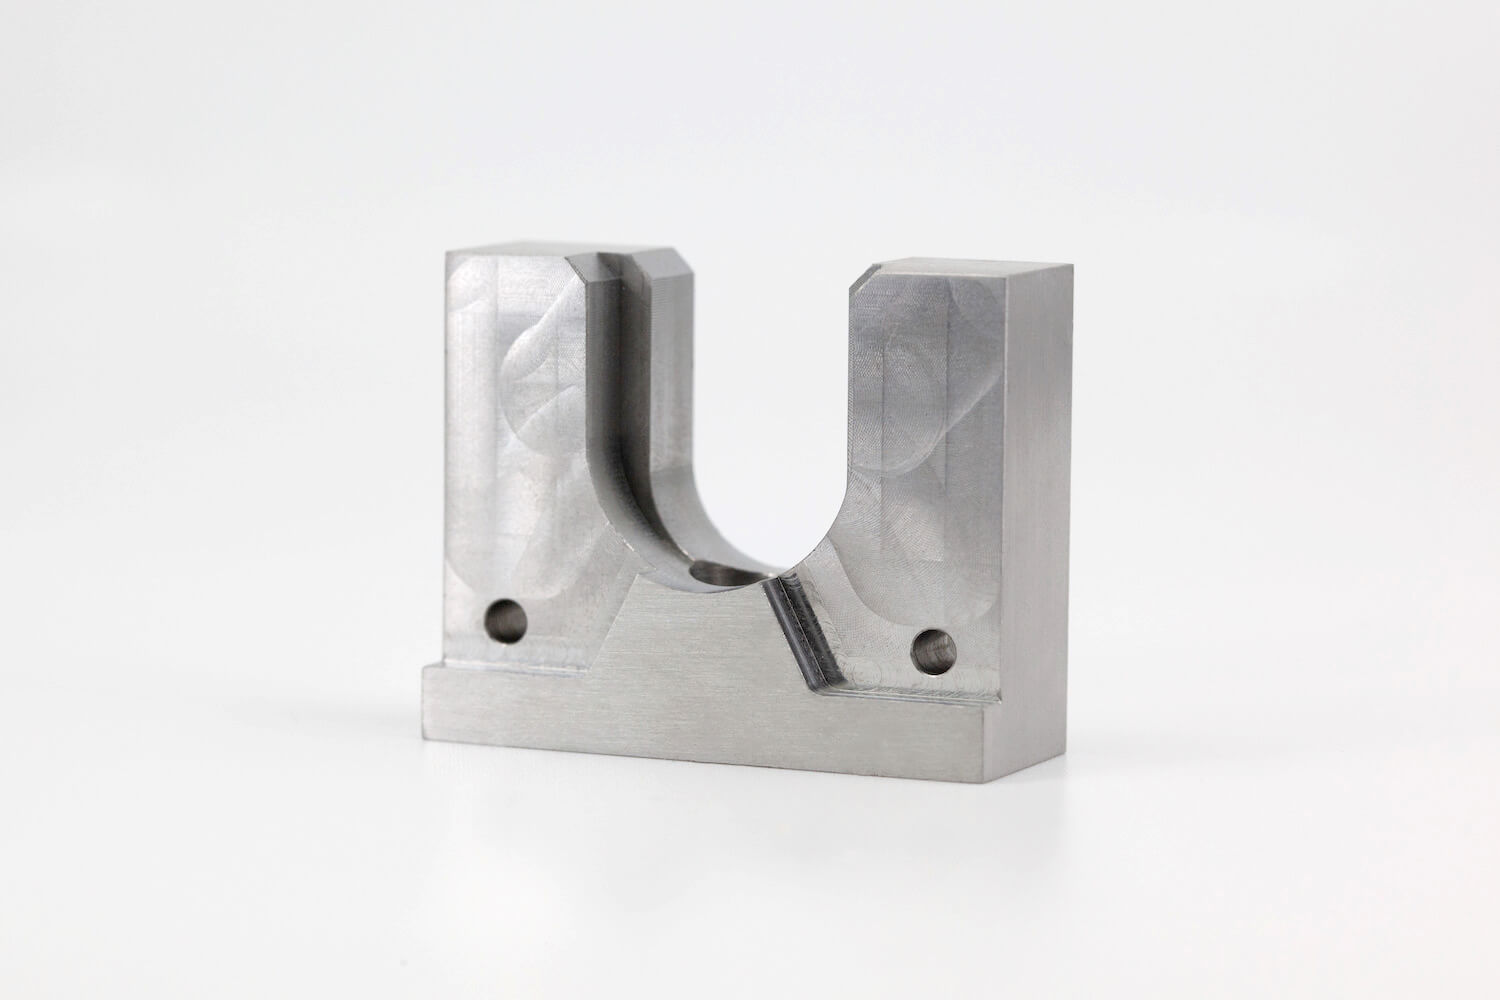 Thick Glass Cutting Kit in Aluminium Case